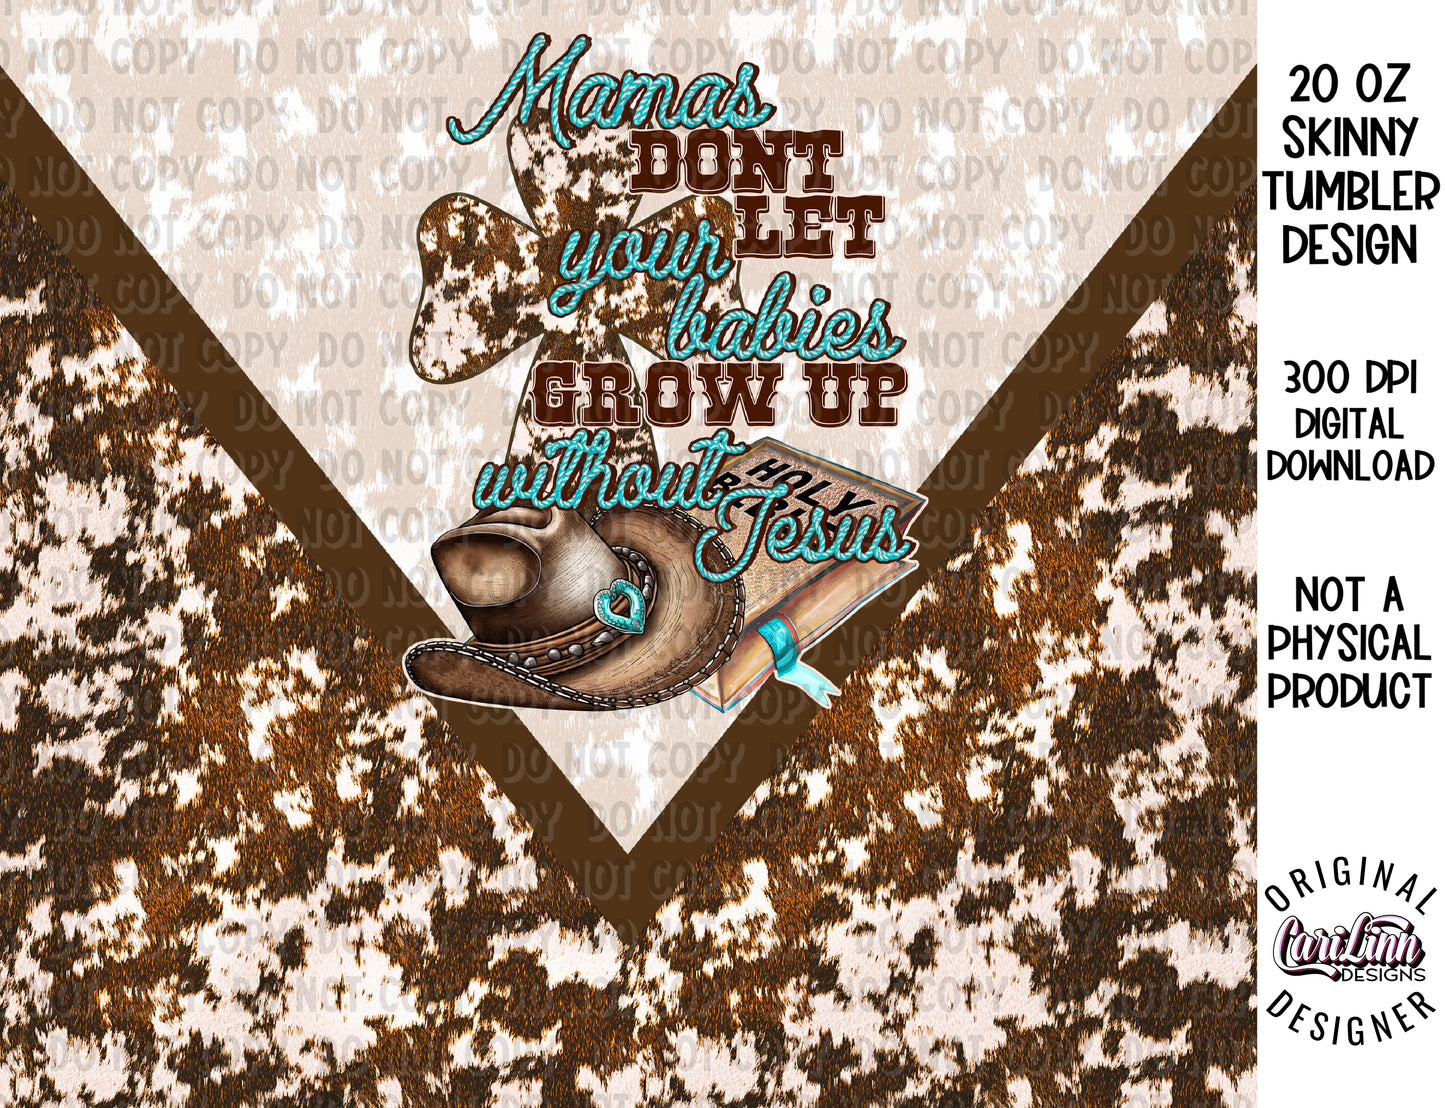 Mamas don't let your babies grow up without Jesus - Tumbler Design, Original Designer, PNG Digital Download